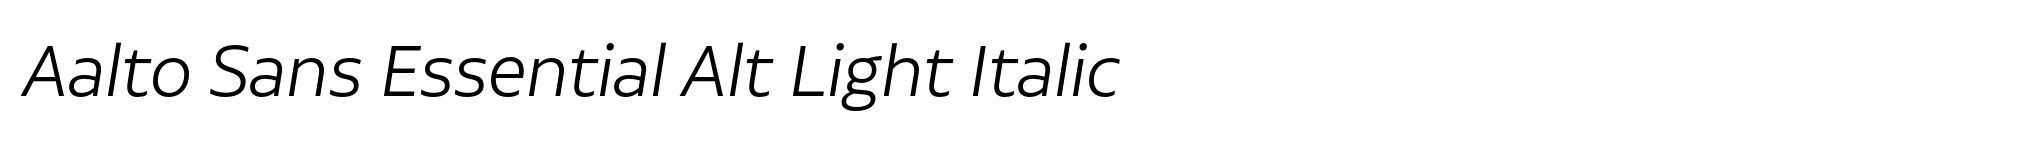 Aalto Sans Essential Alt Light Italic image